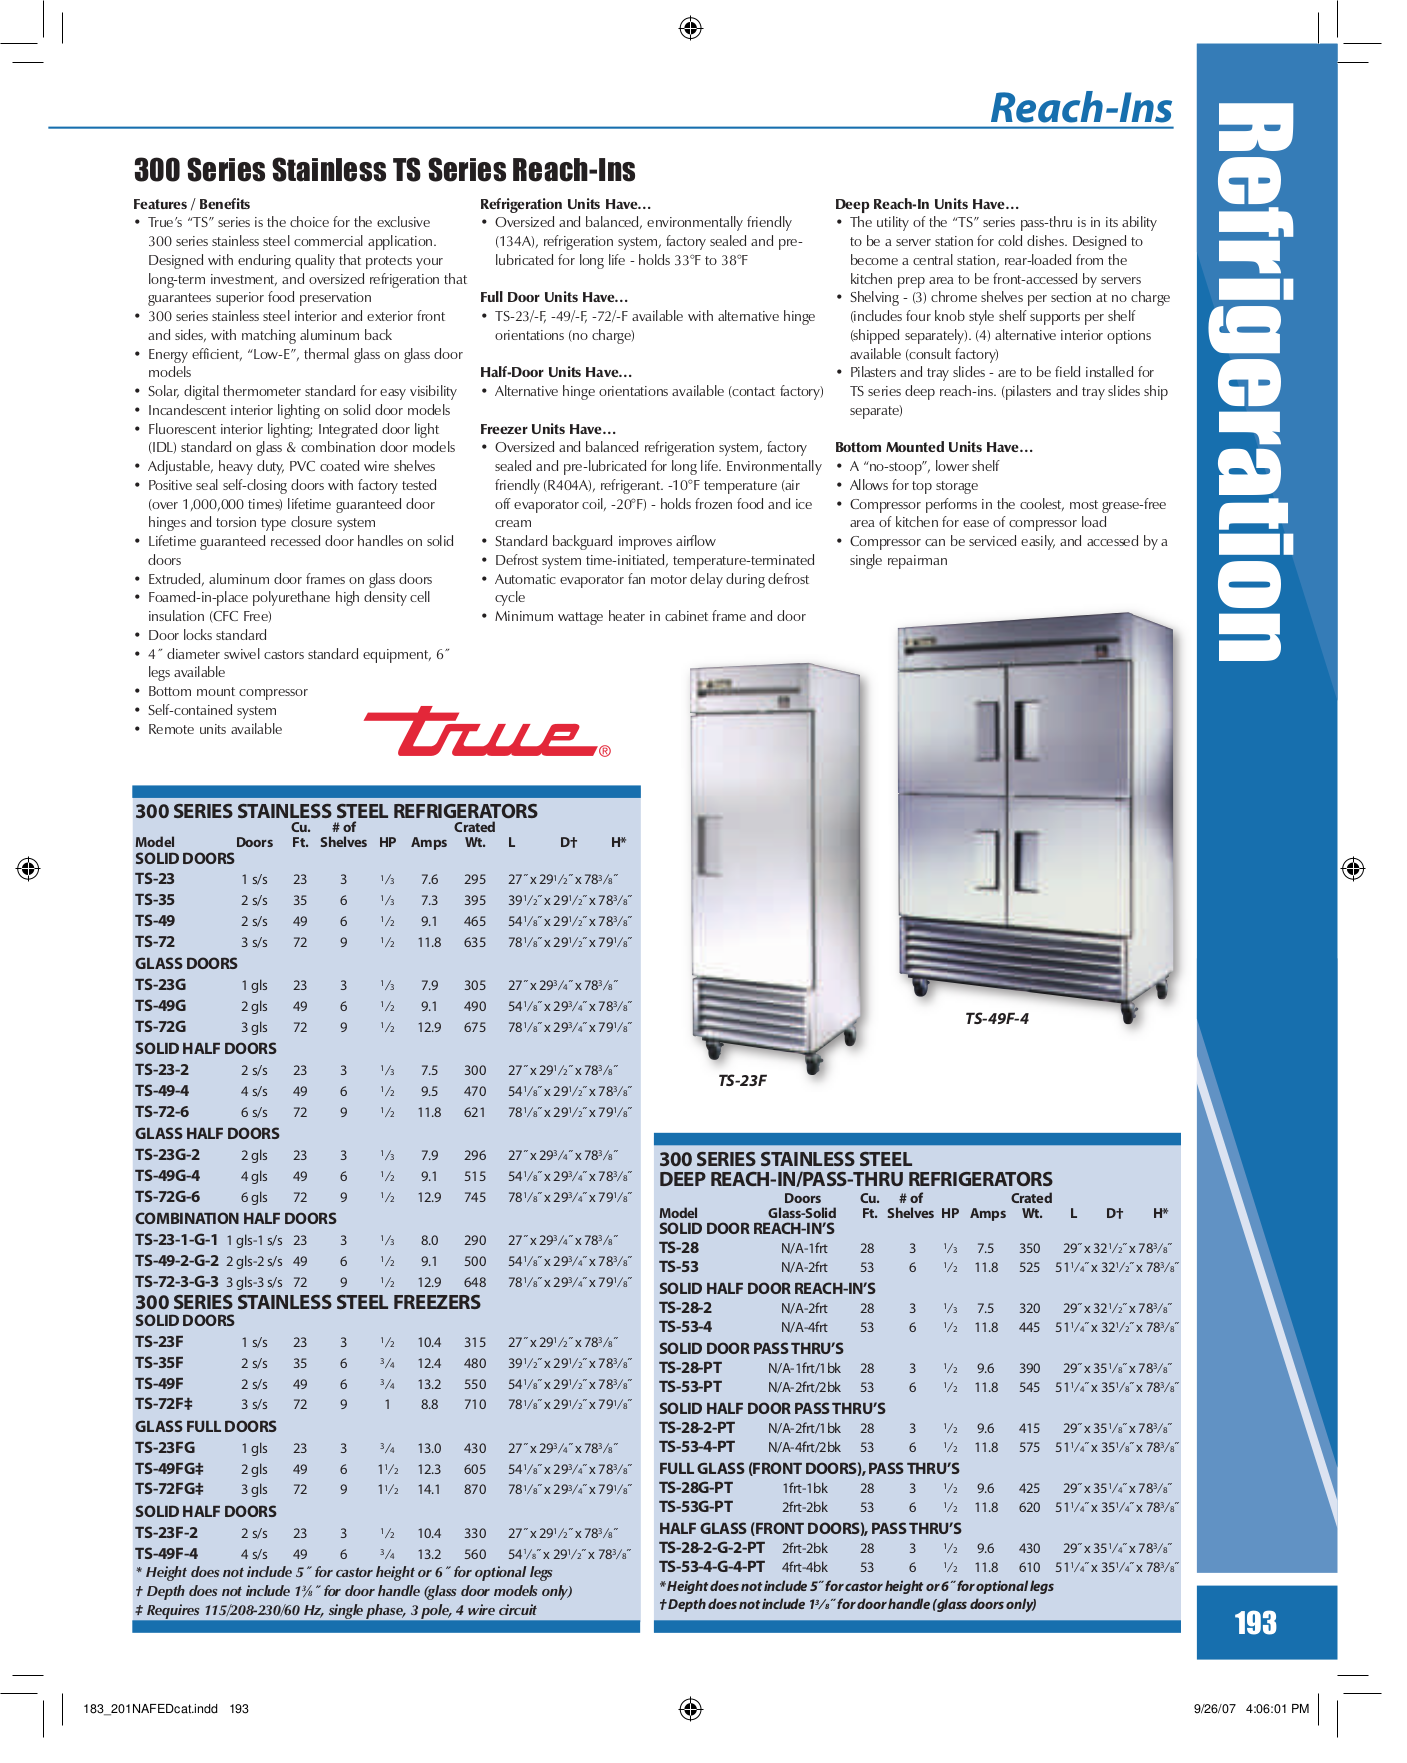 PDF manual for Randell Refrigerator 8395N